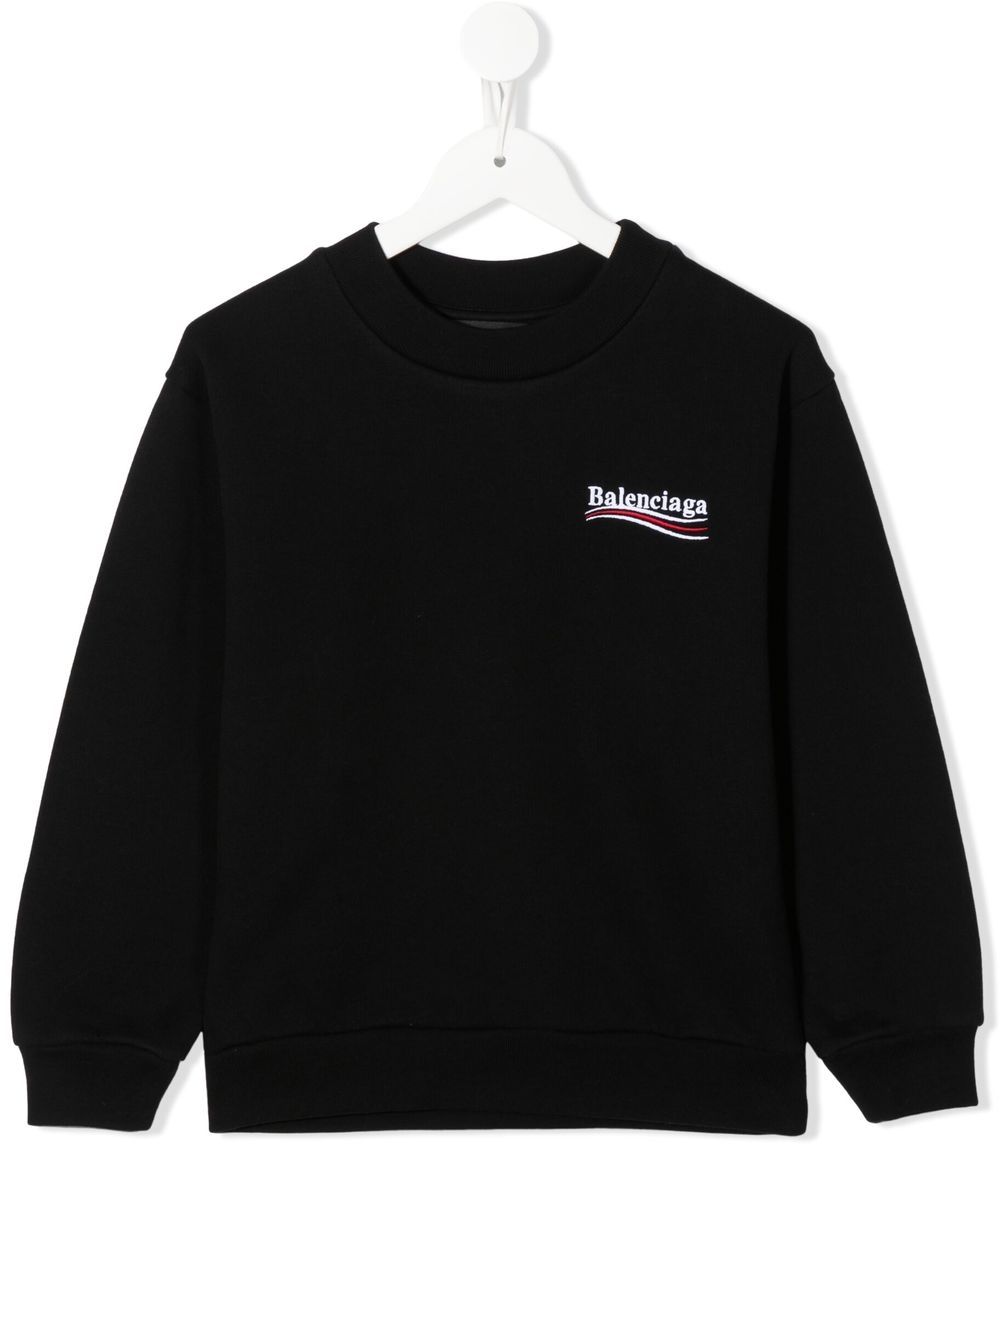 Balenciaga Kids Political Campaign sweatshirt - Black